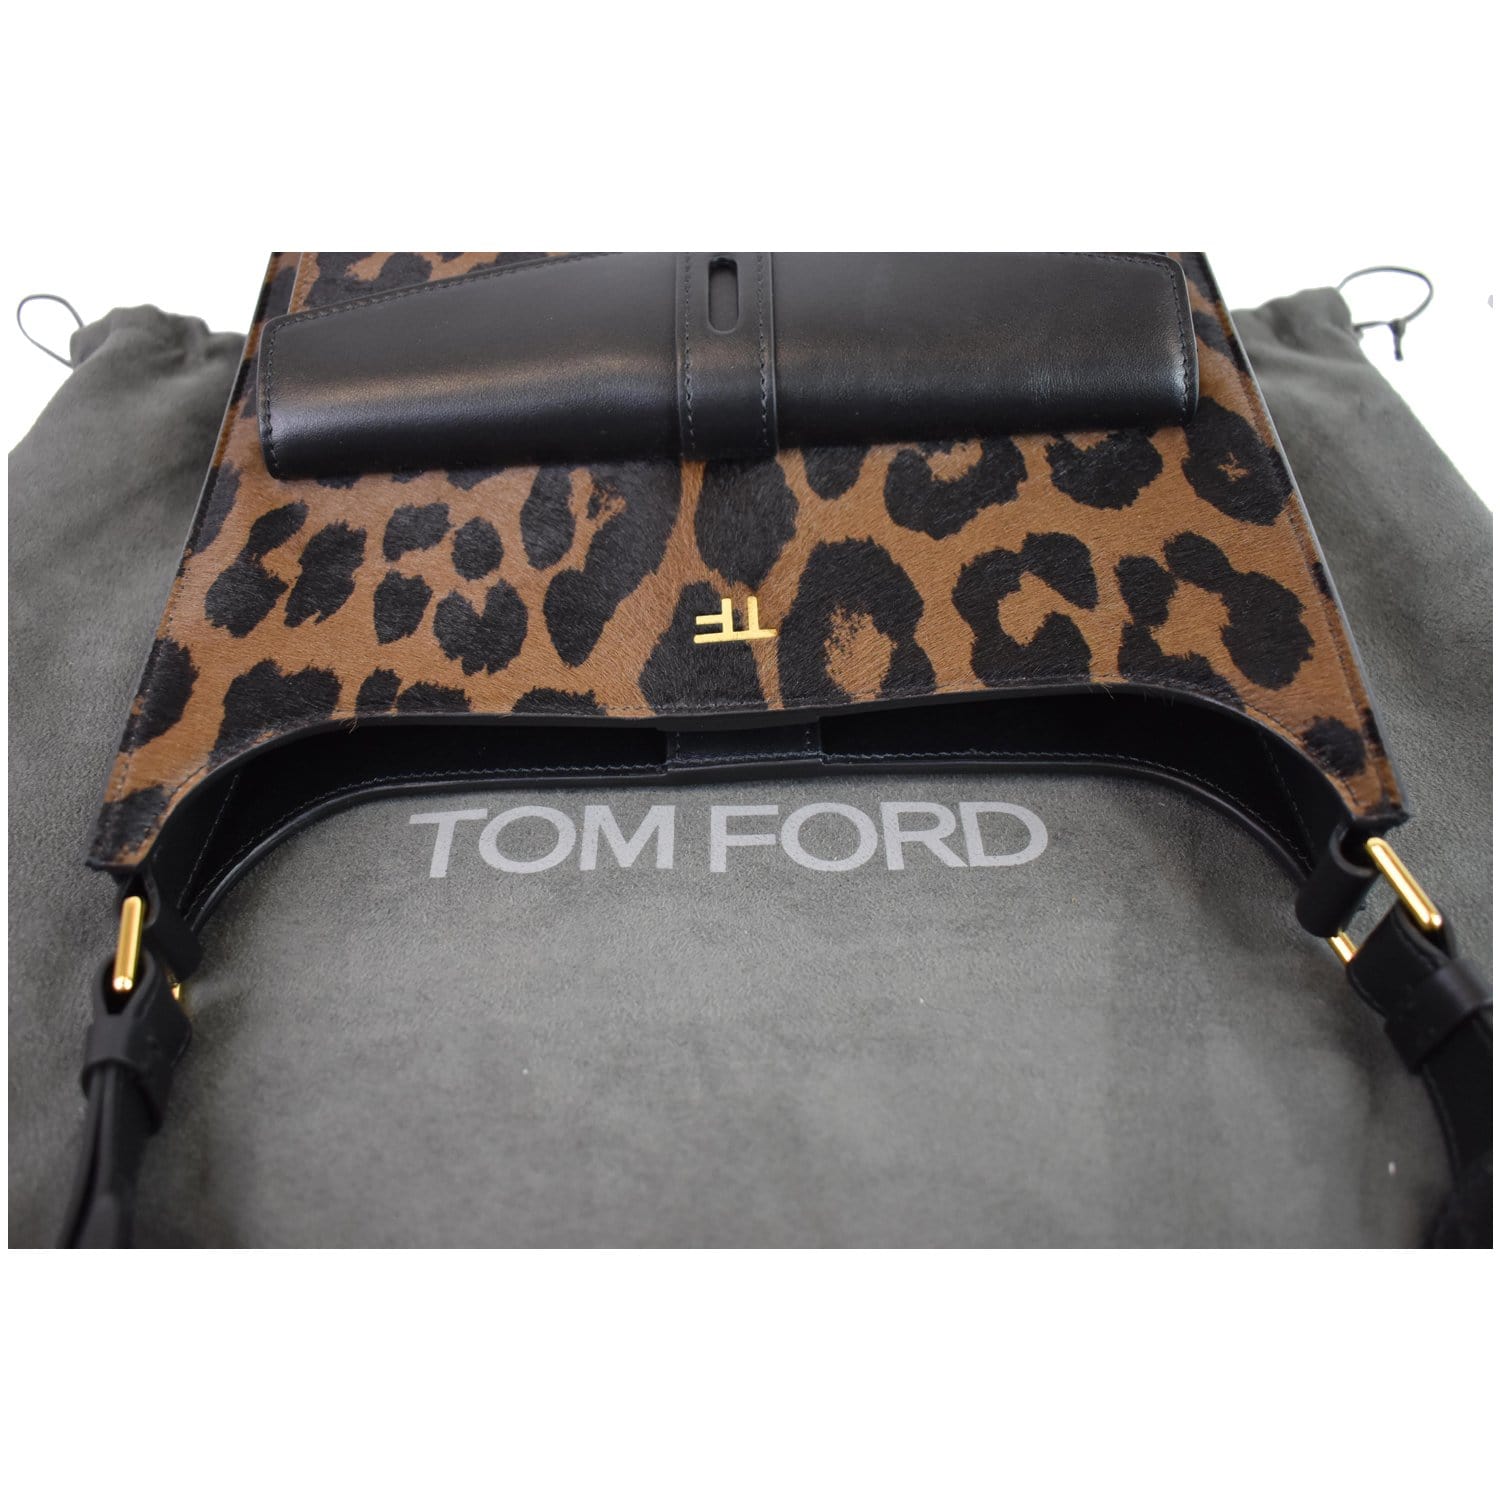 Tom Ford Animal Print Pony Hair Clutch Bag